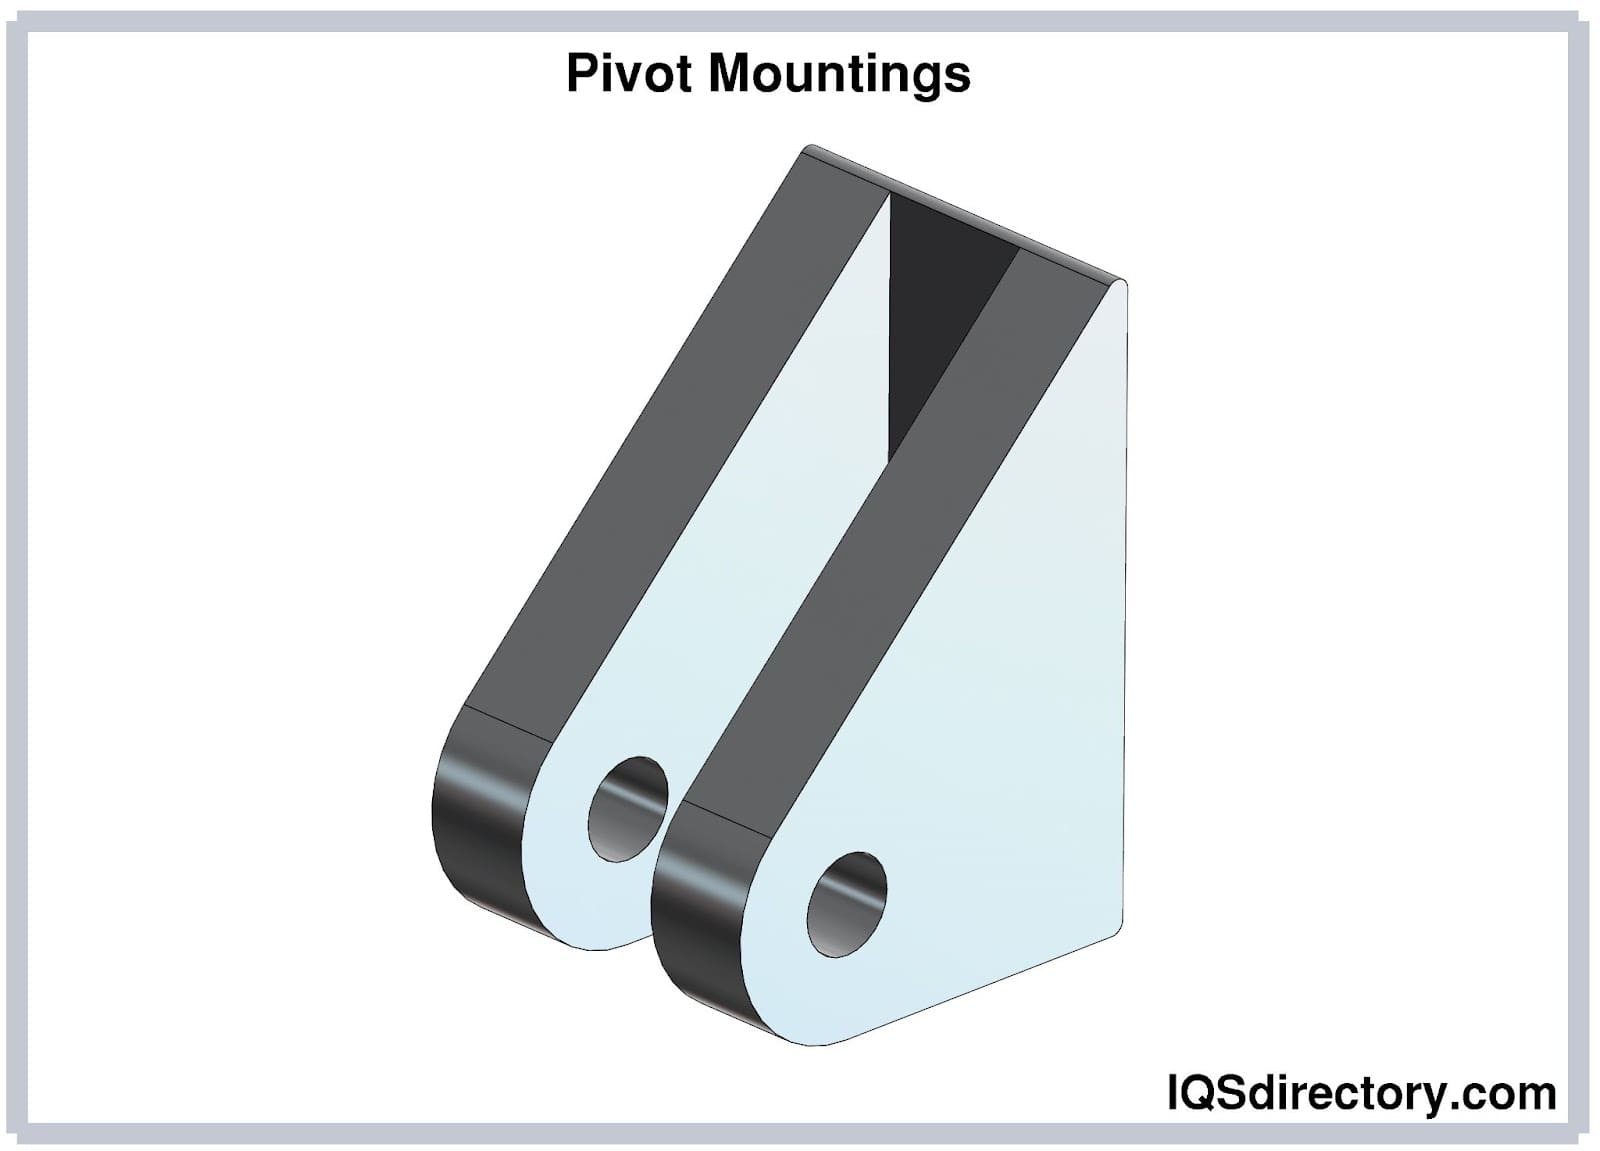 Pivot Mountings